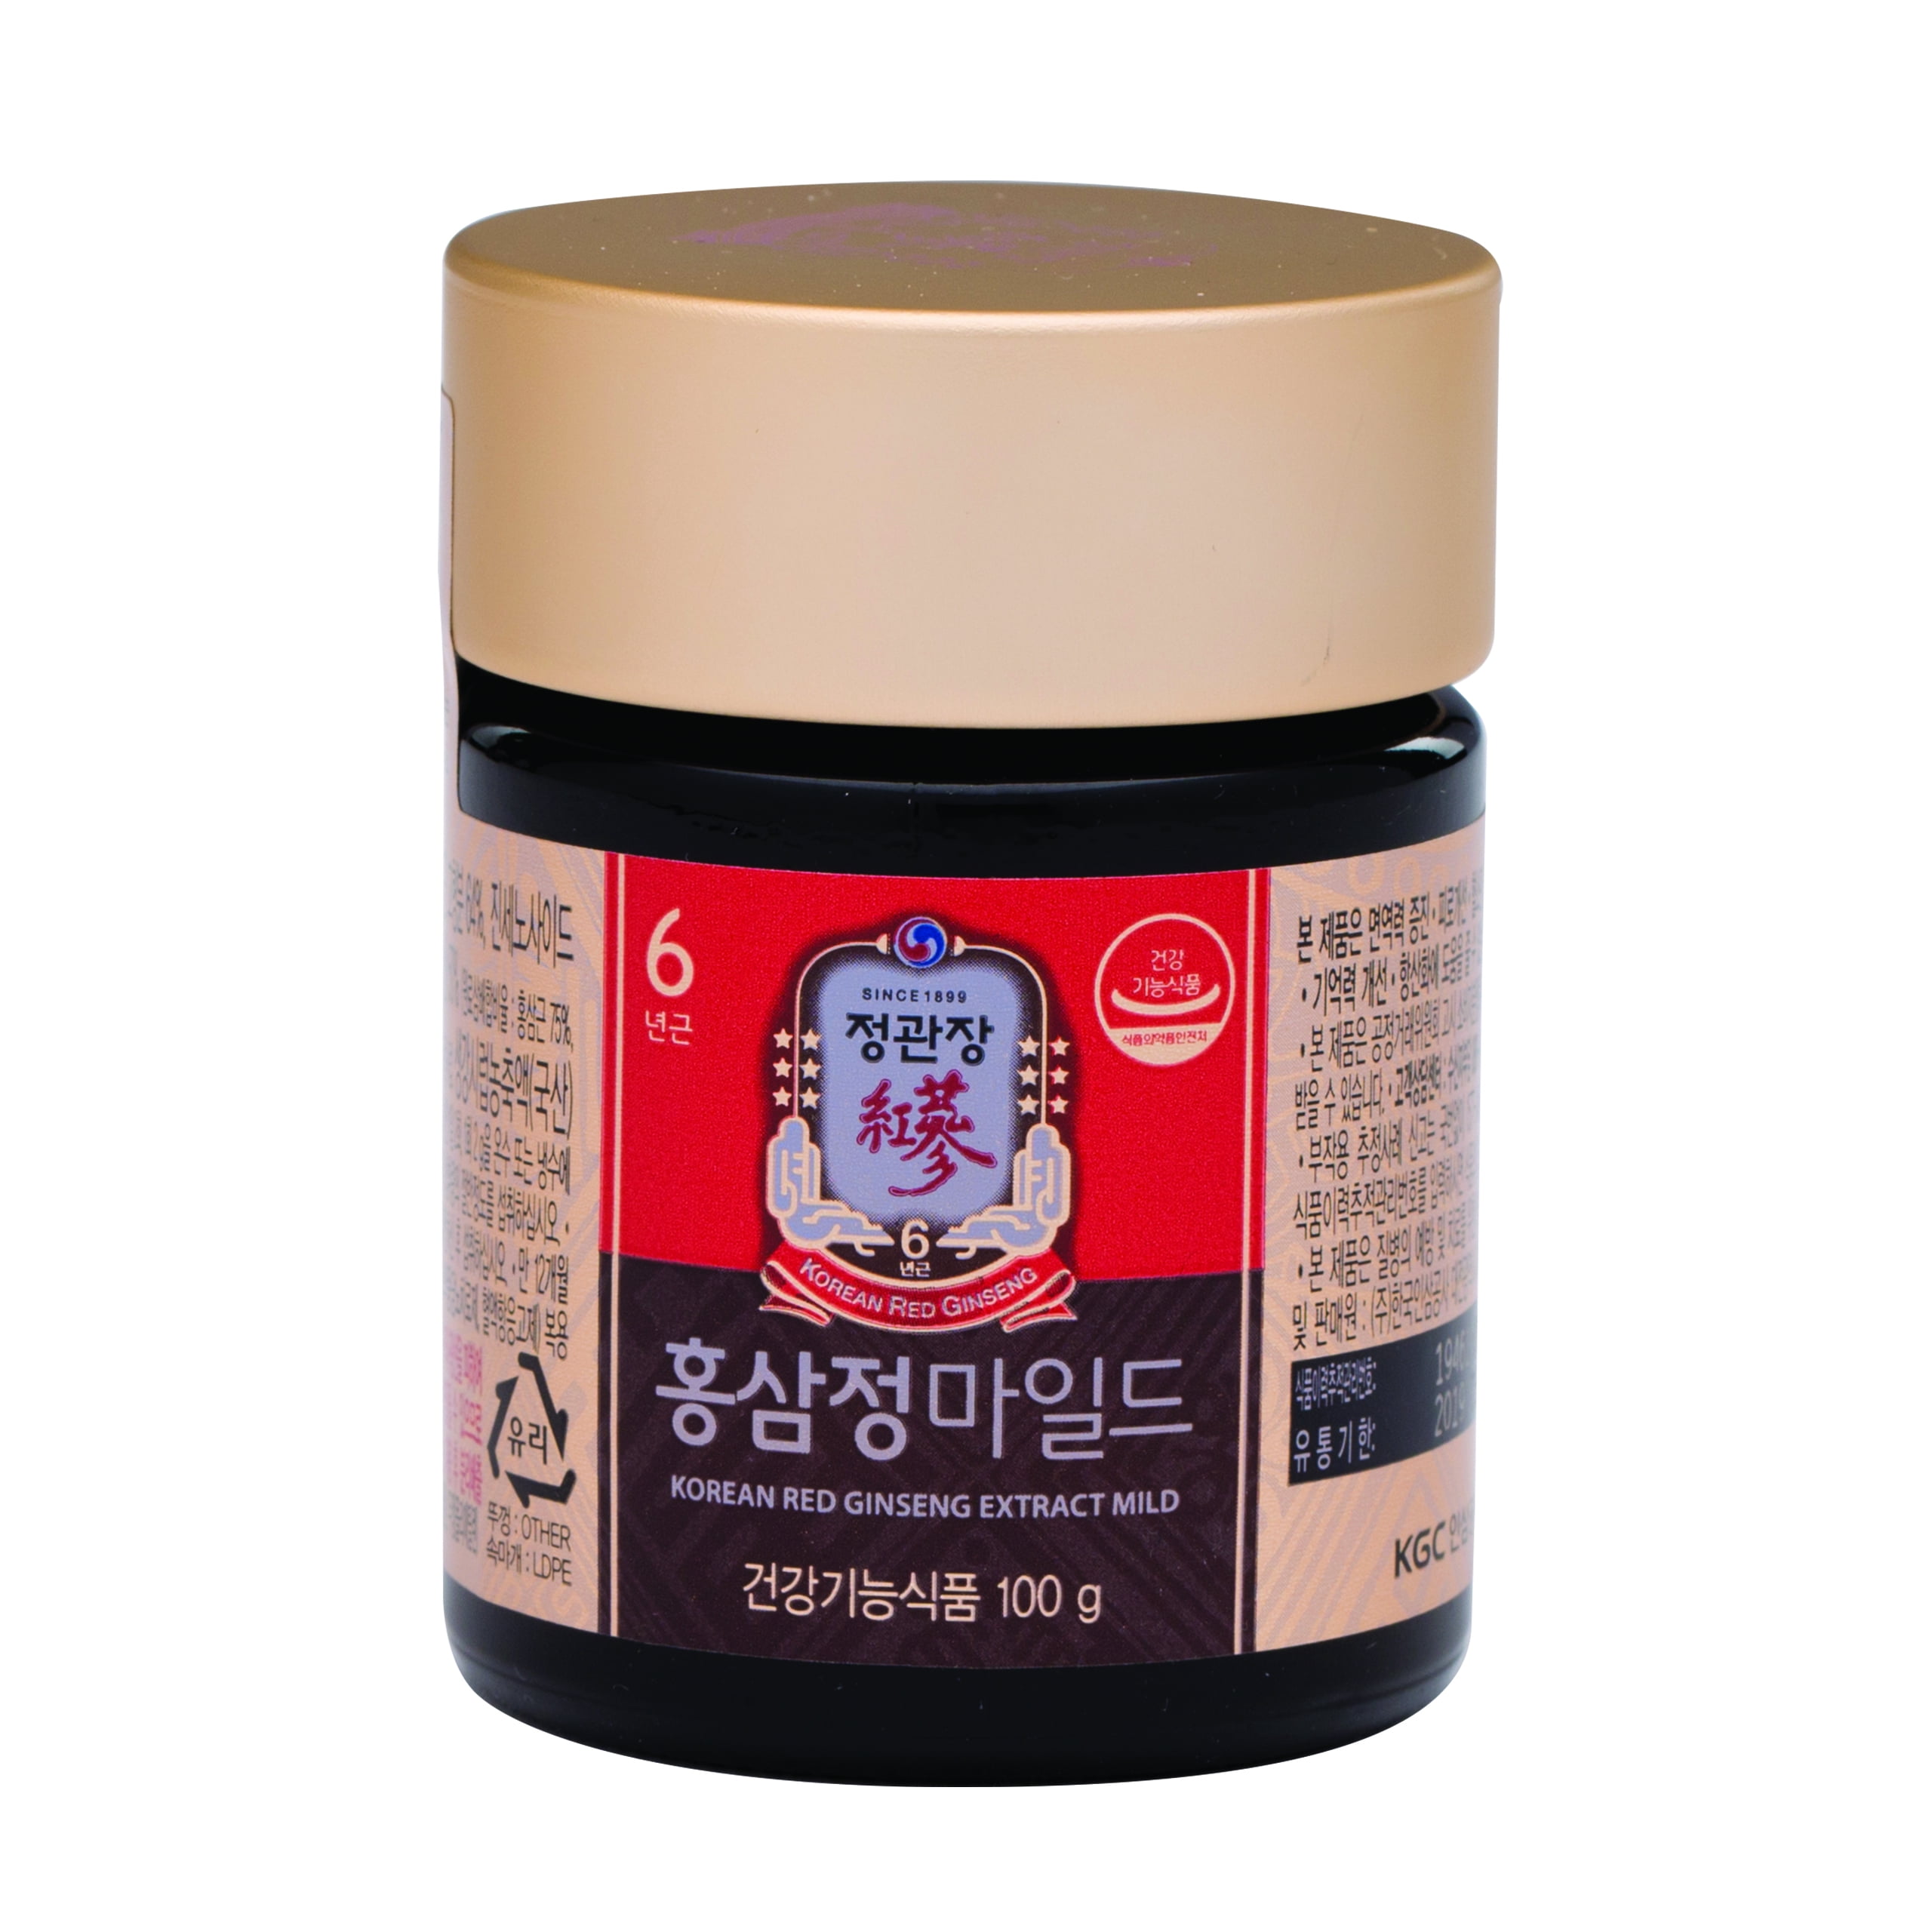 Korean Panax Red Ginseng 1000mg Extract Mild - Walmart.com - Walmart.com